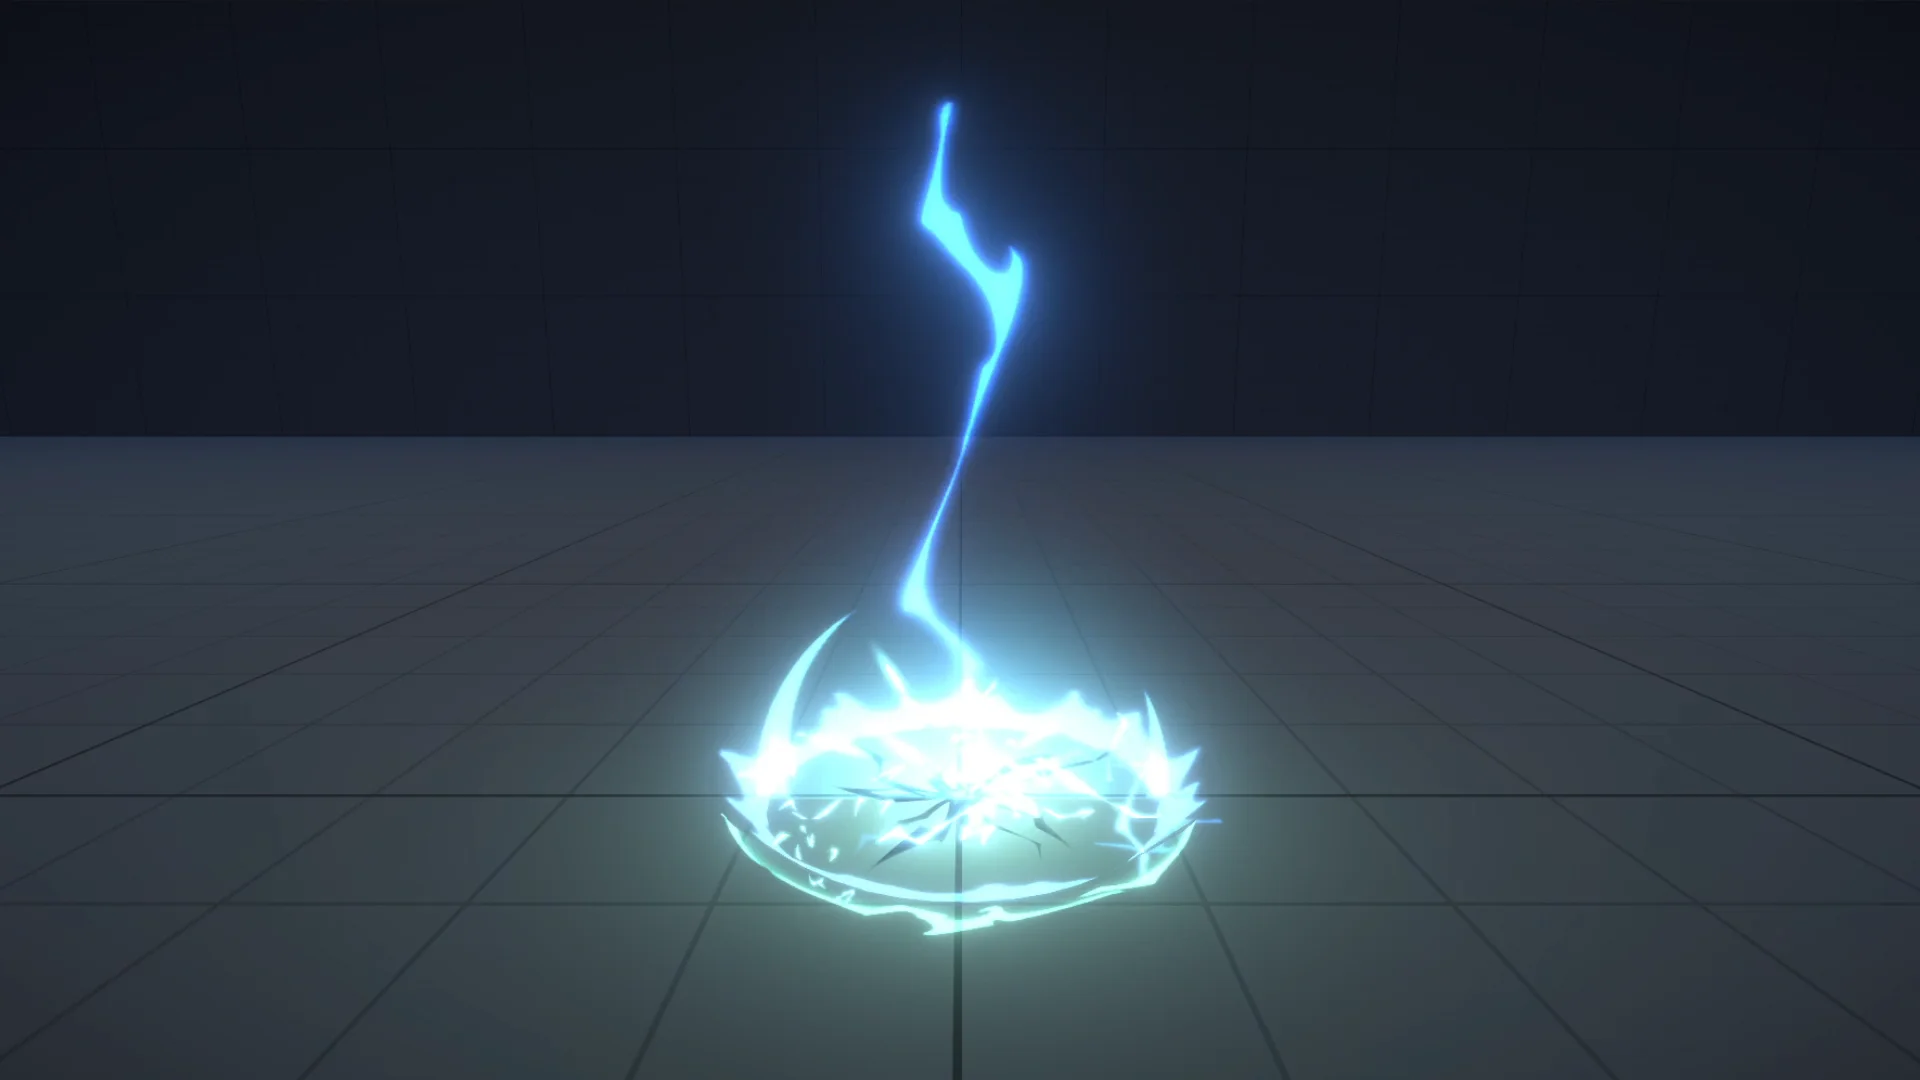 WIP Lightning Strikes - Real Time VFX